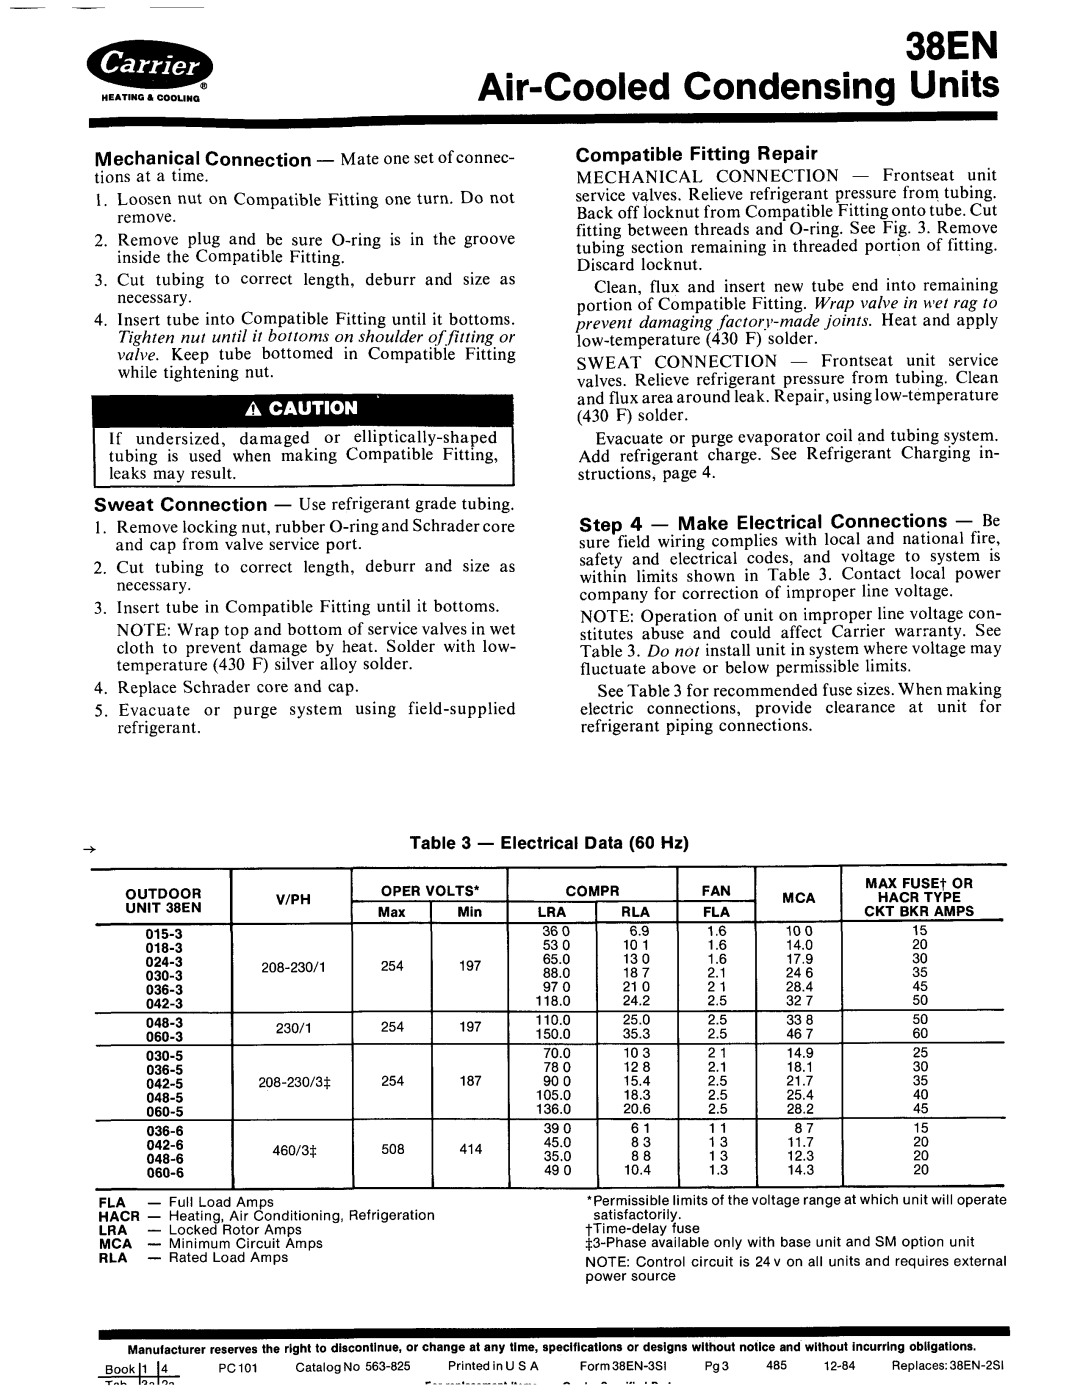 Carrier 38EN manual 